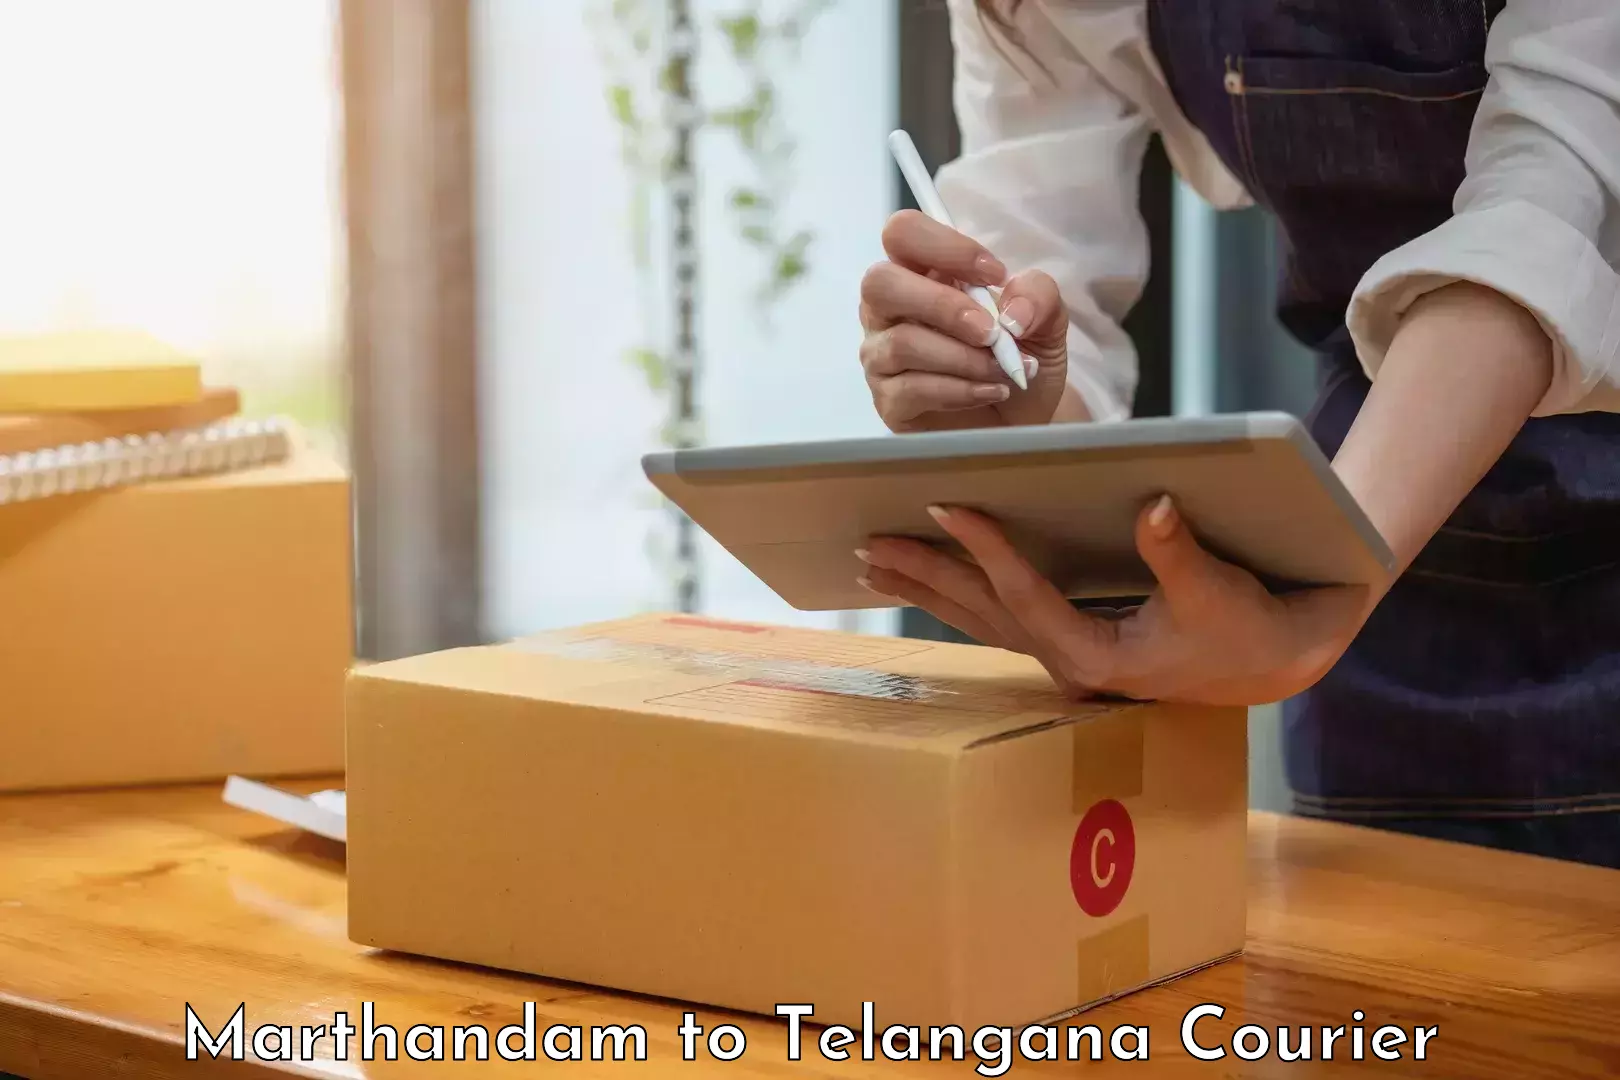 Professional courier handling Marthandam to Telangana